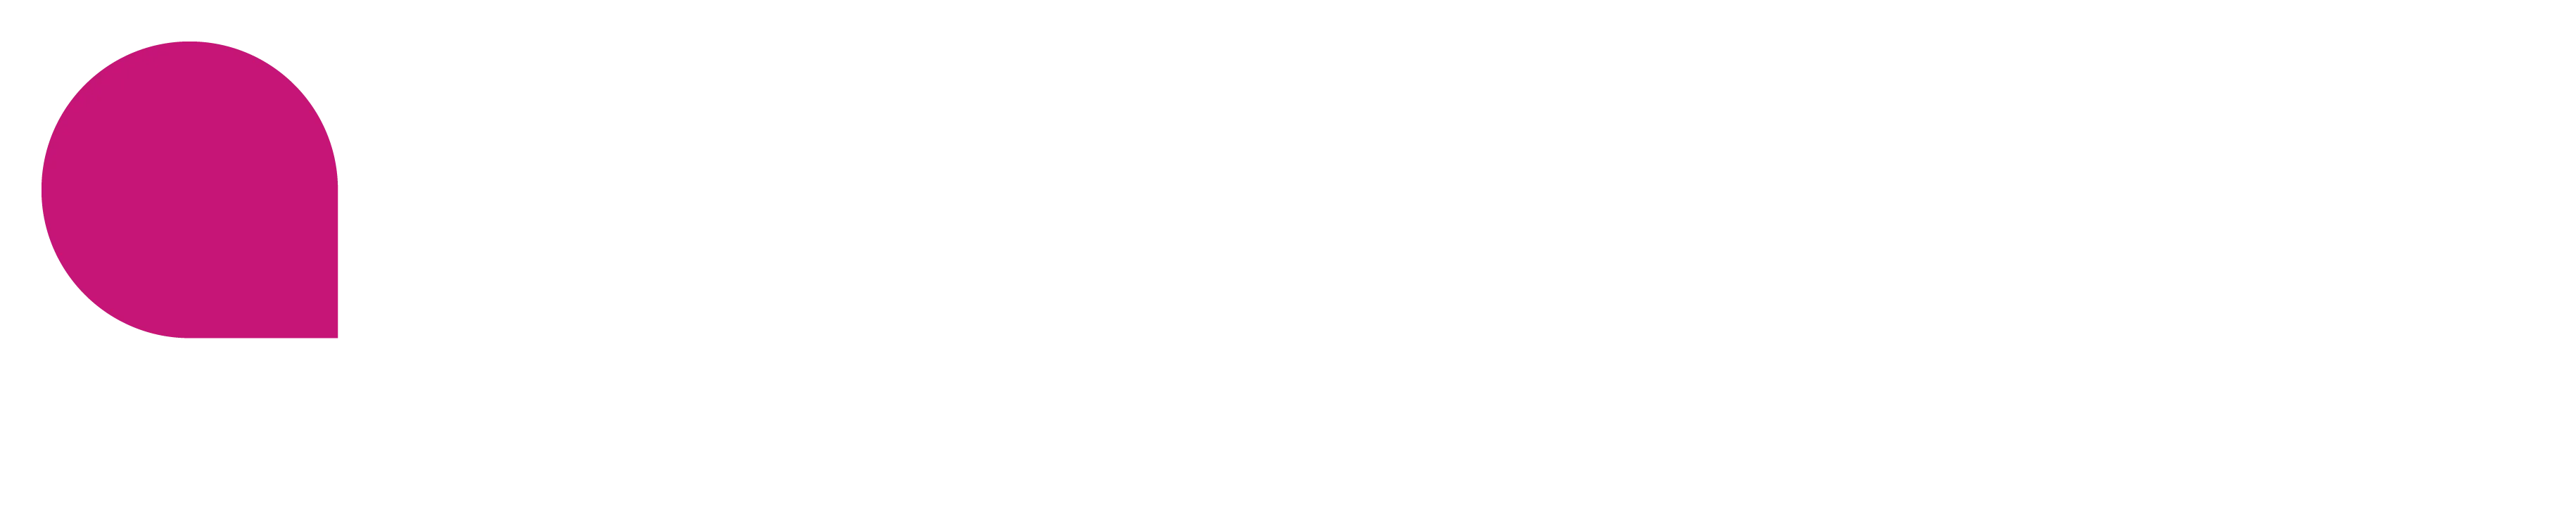 Bett23-location-dates-logo-london-pink-white (1)